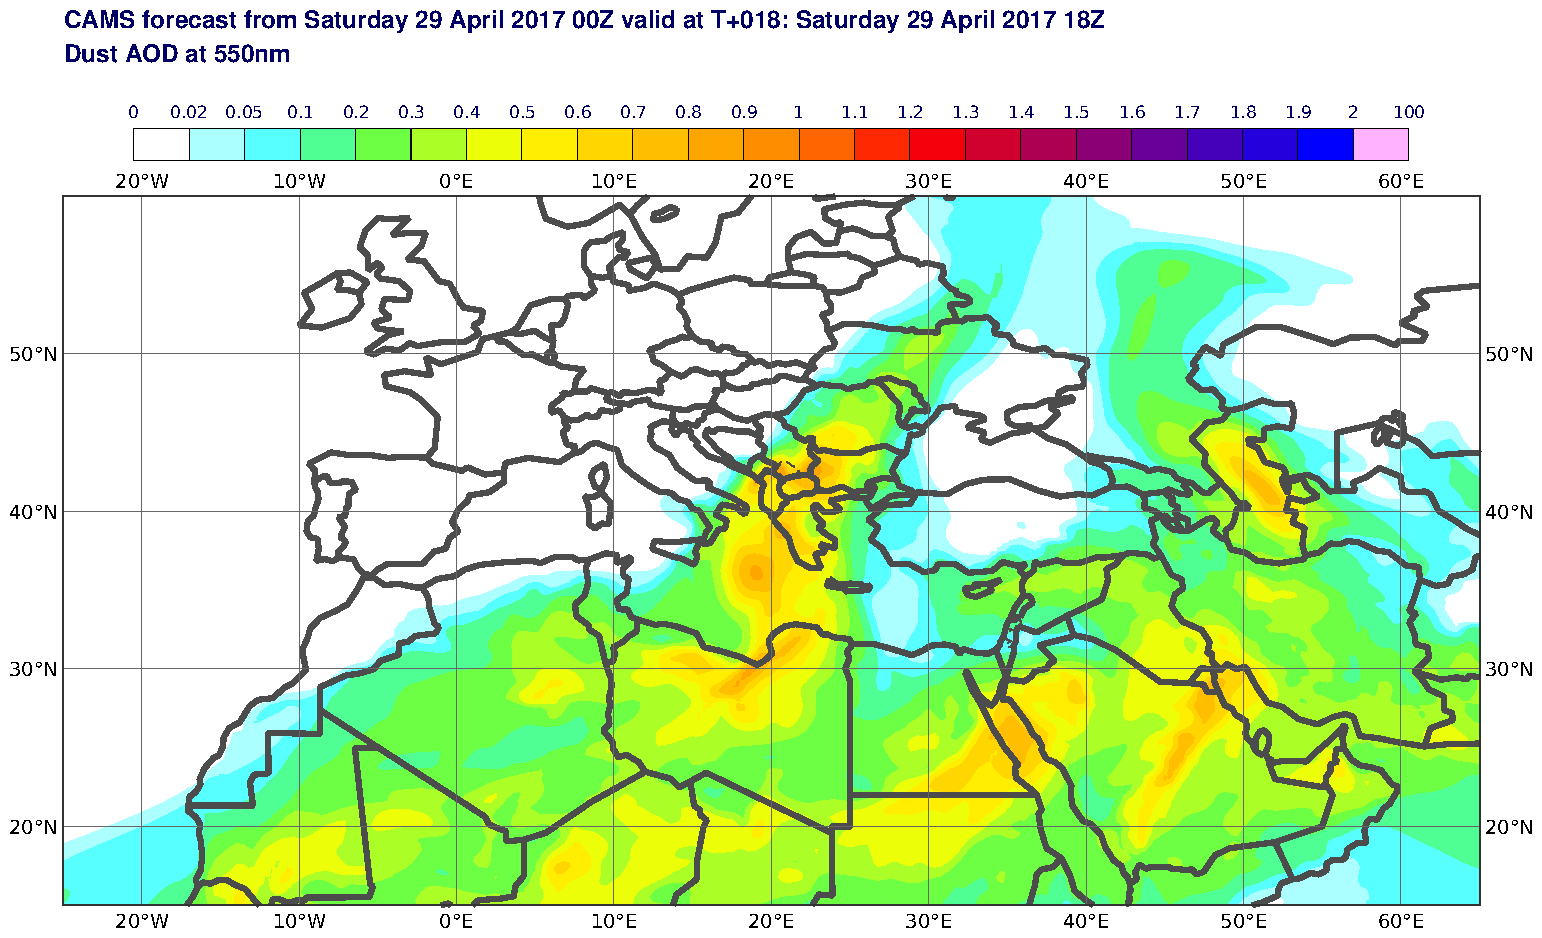 Dust AOD at 550nm valid at T18 - 2017-04-29 18:00